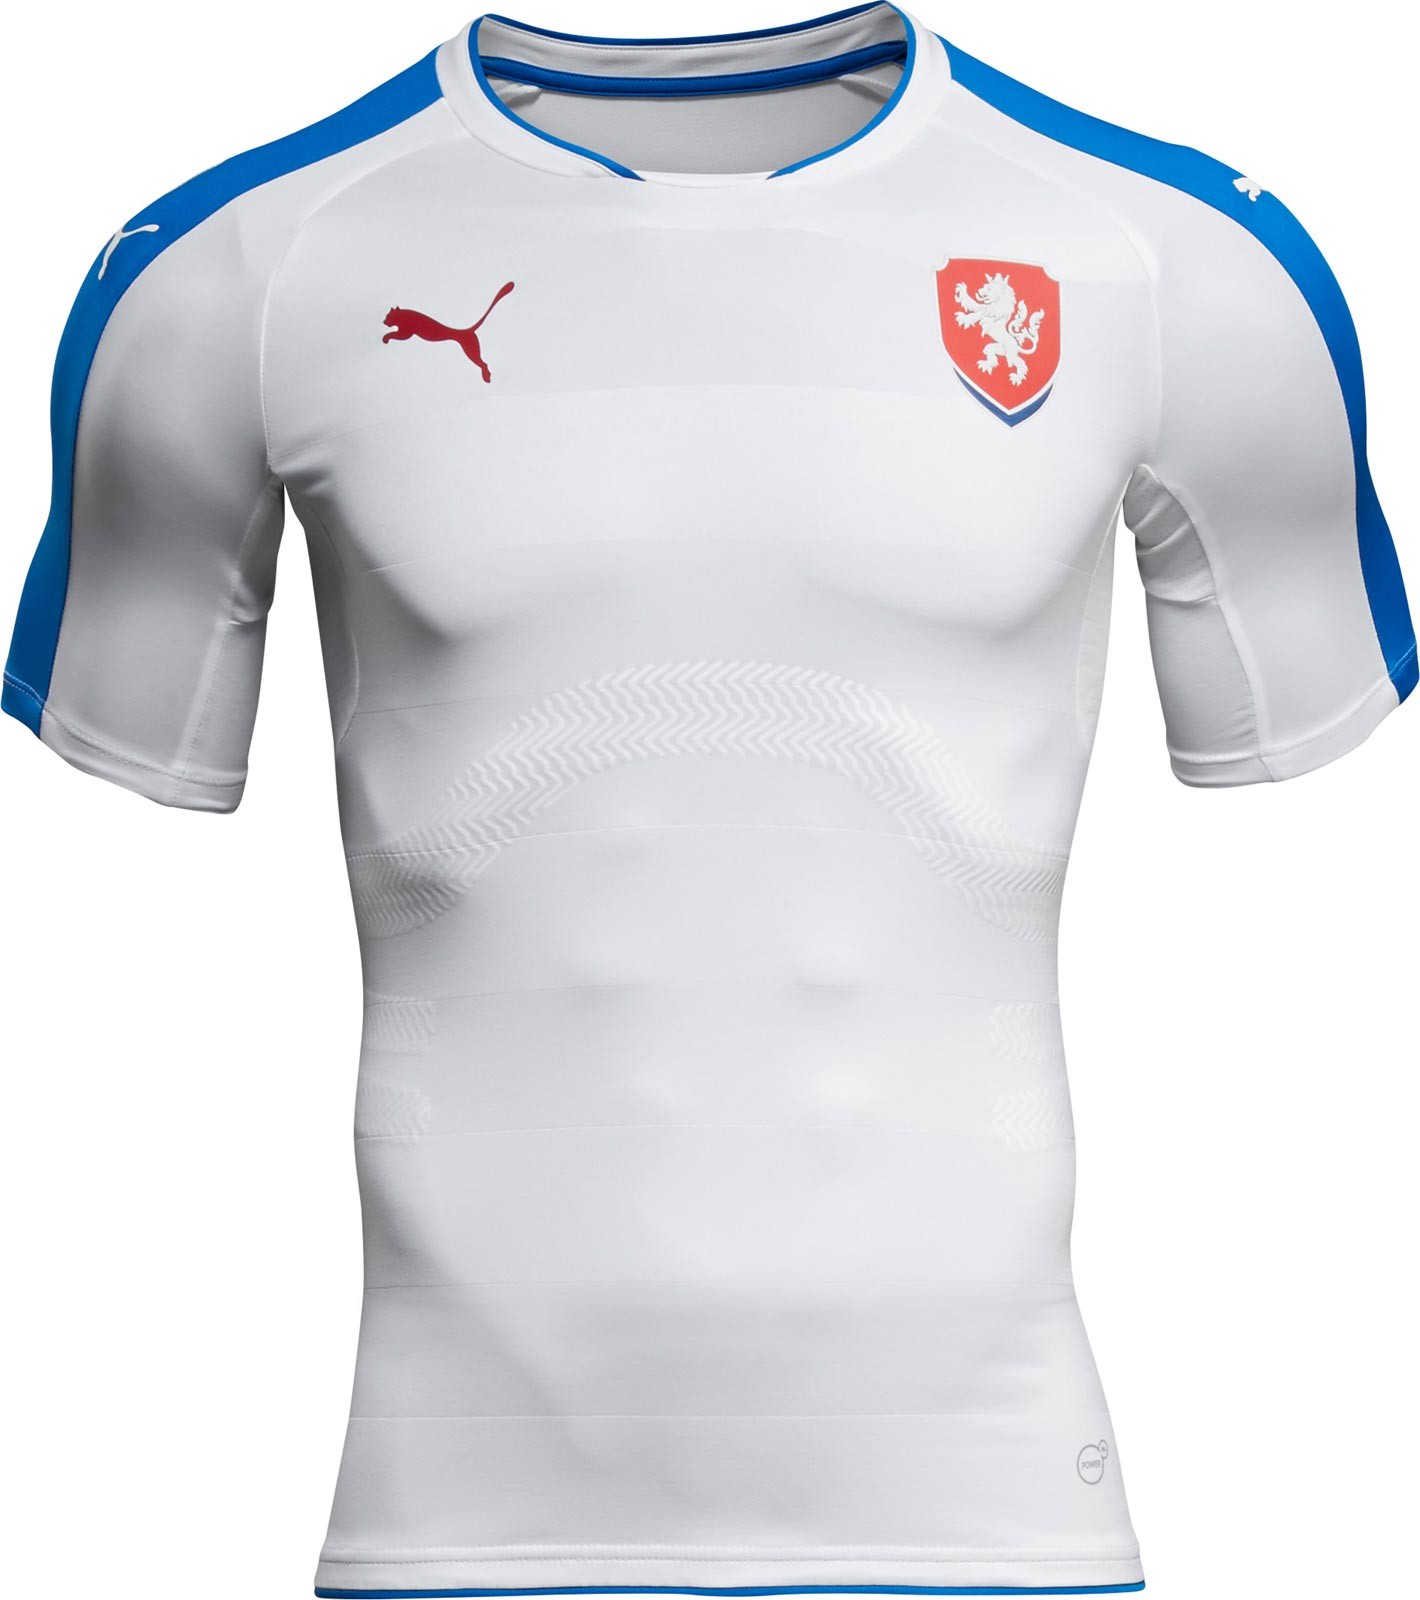 Czech Republic 2016 Away Kit